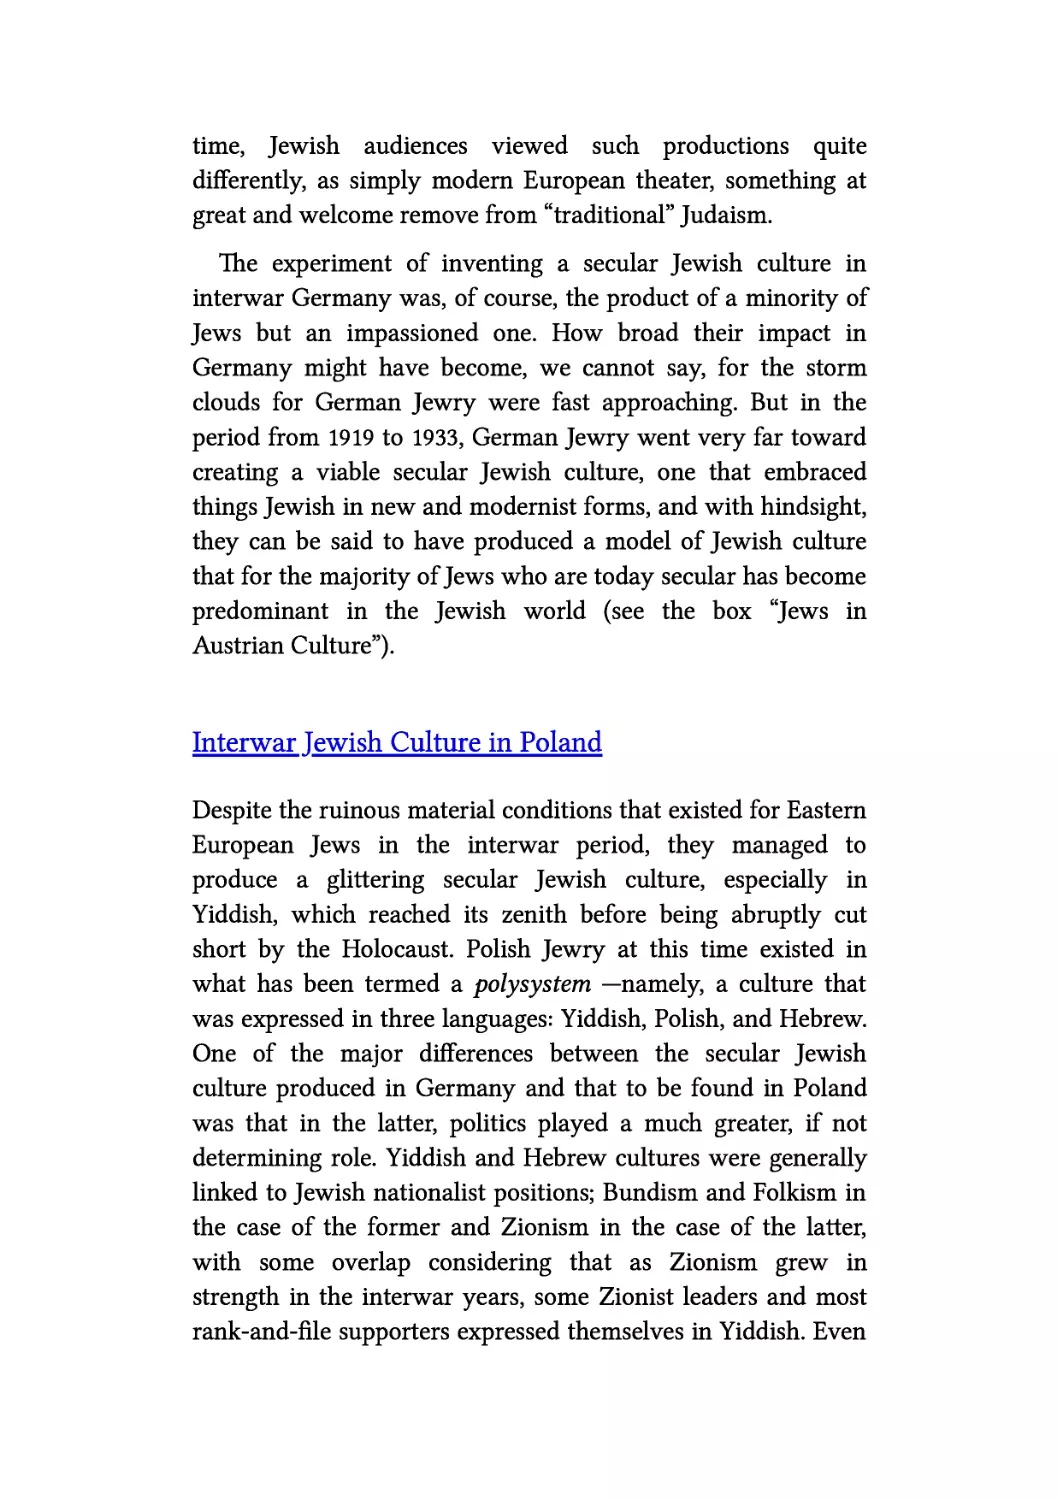 Interwar Jewish Culture in Poland